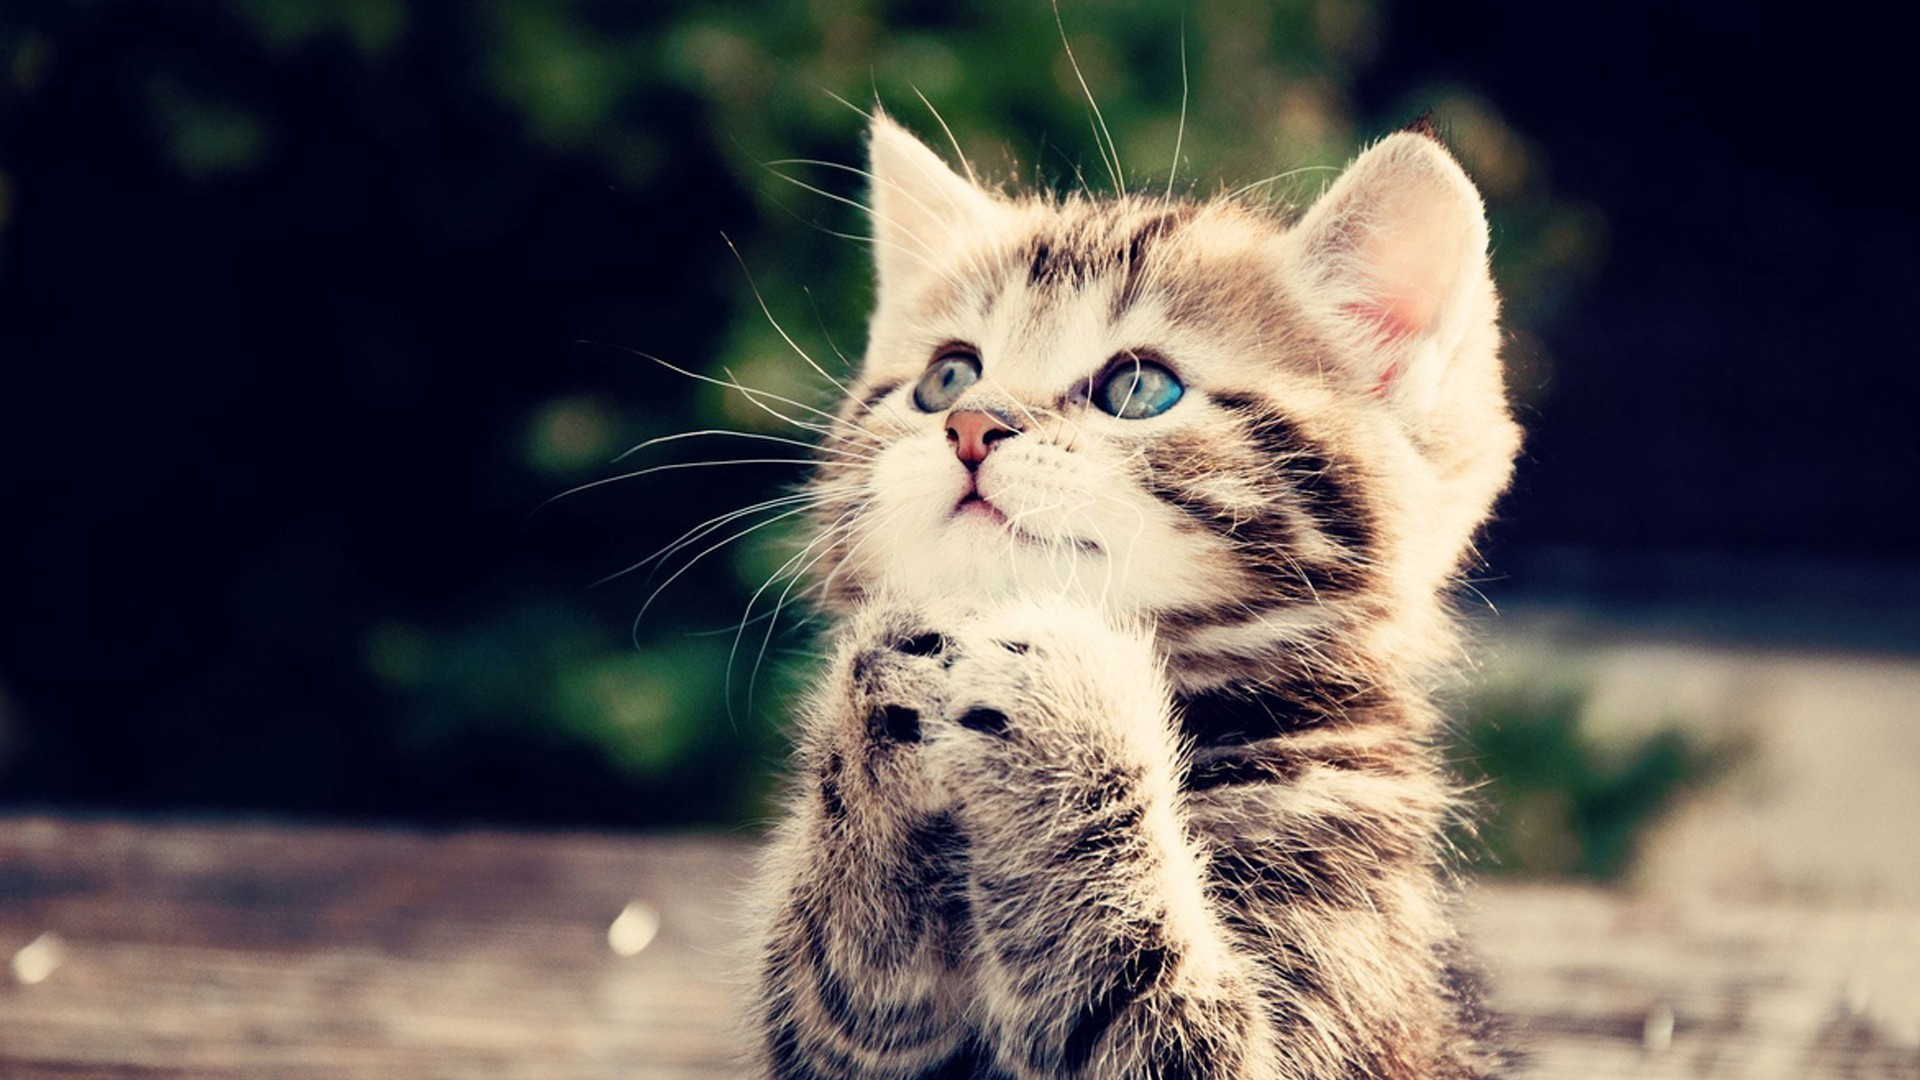 Cute Kitten | QTPI: Share Cuteness, not hatred